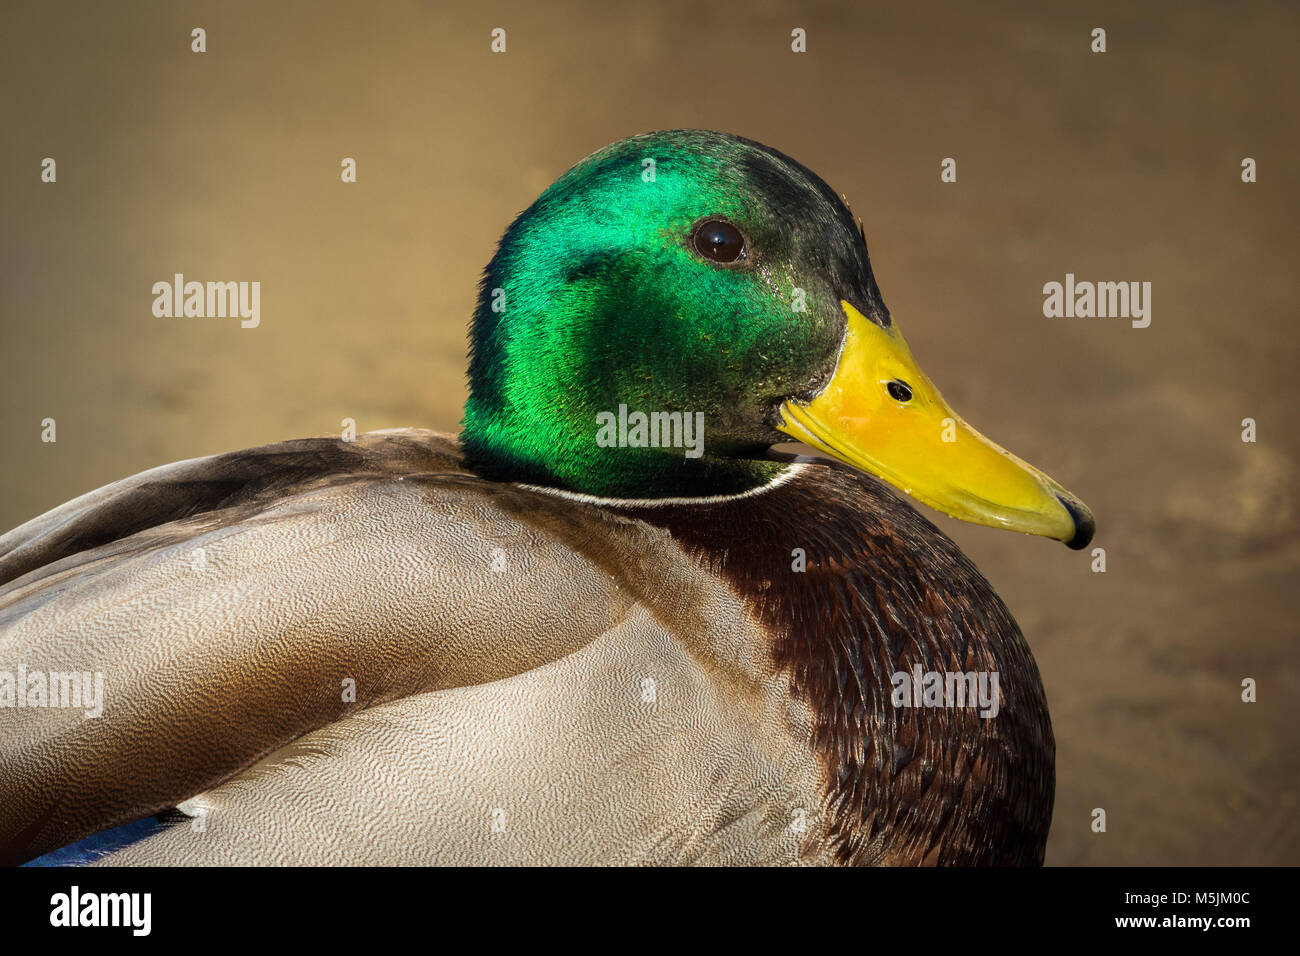 Fondo de pato fotografías e imágenes de alta resolución - Alamy